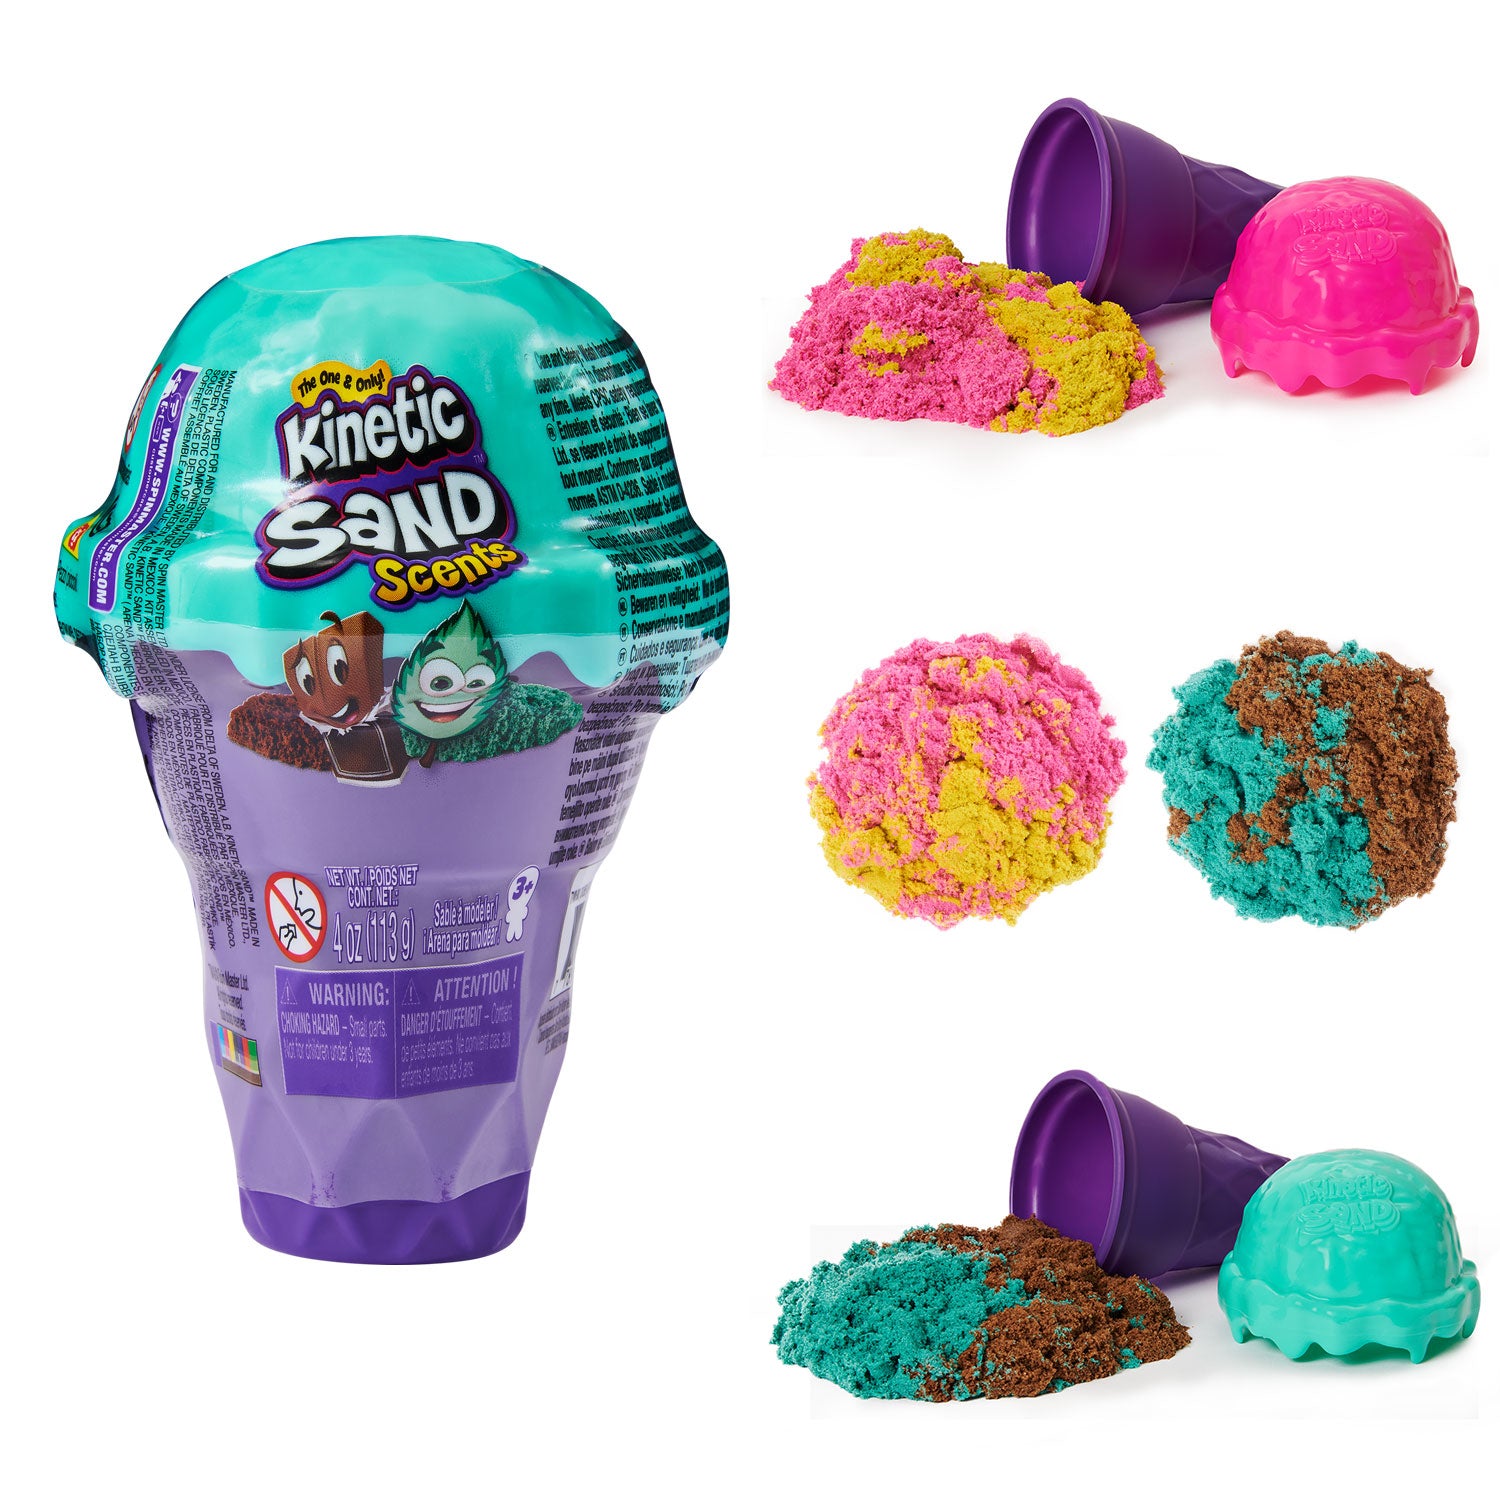 SPIN MASTER - KINETIC SAND Scents - Ice Cream Cones - Random Color - Age: +3